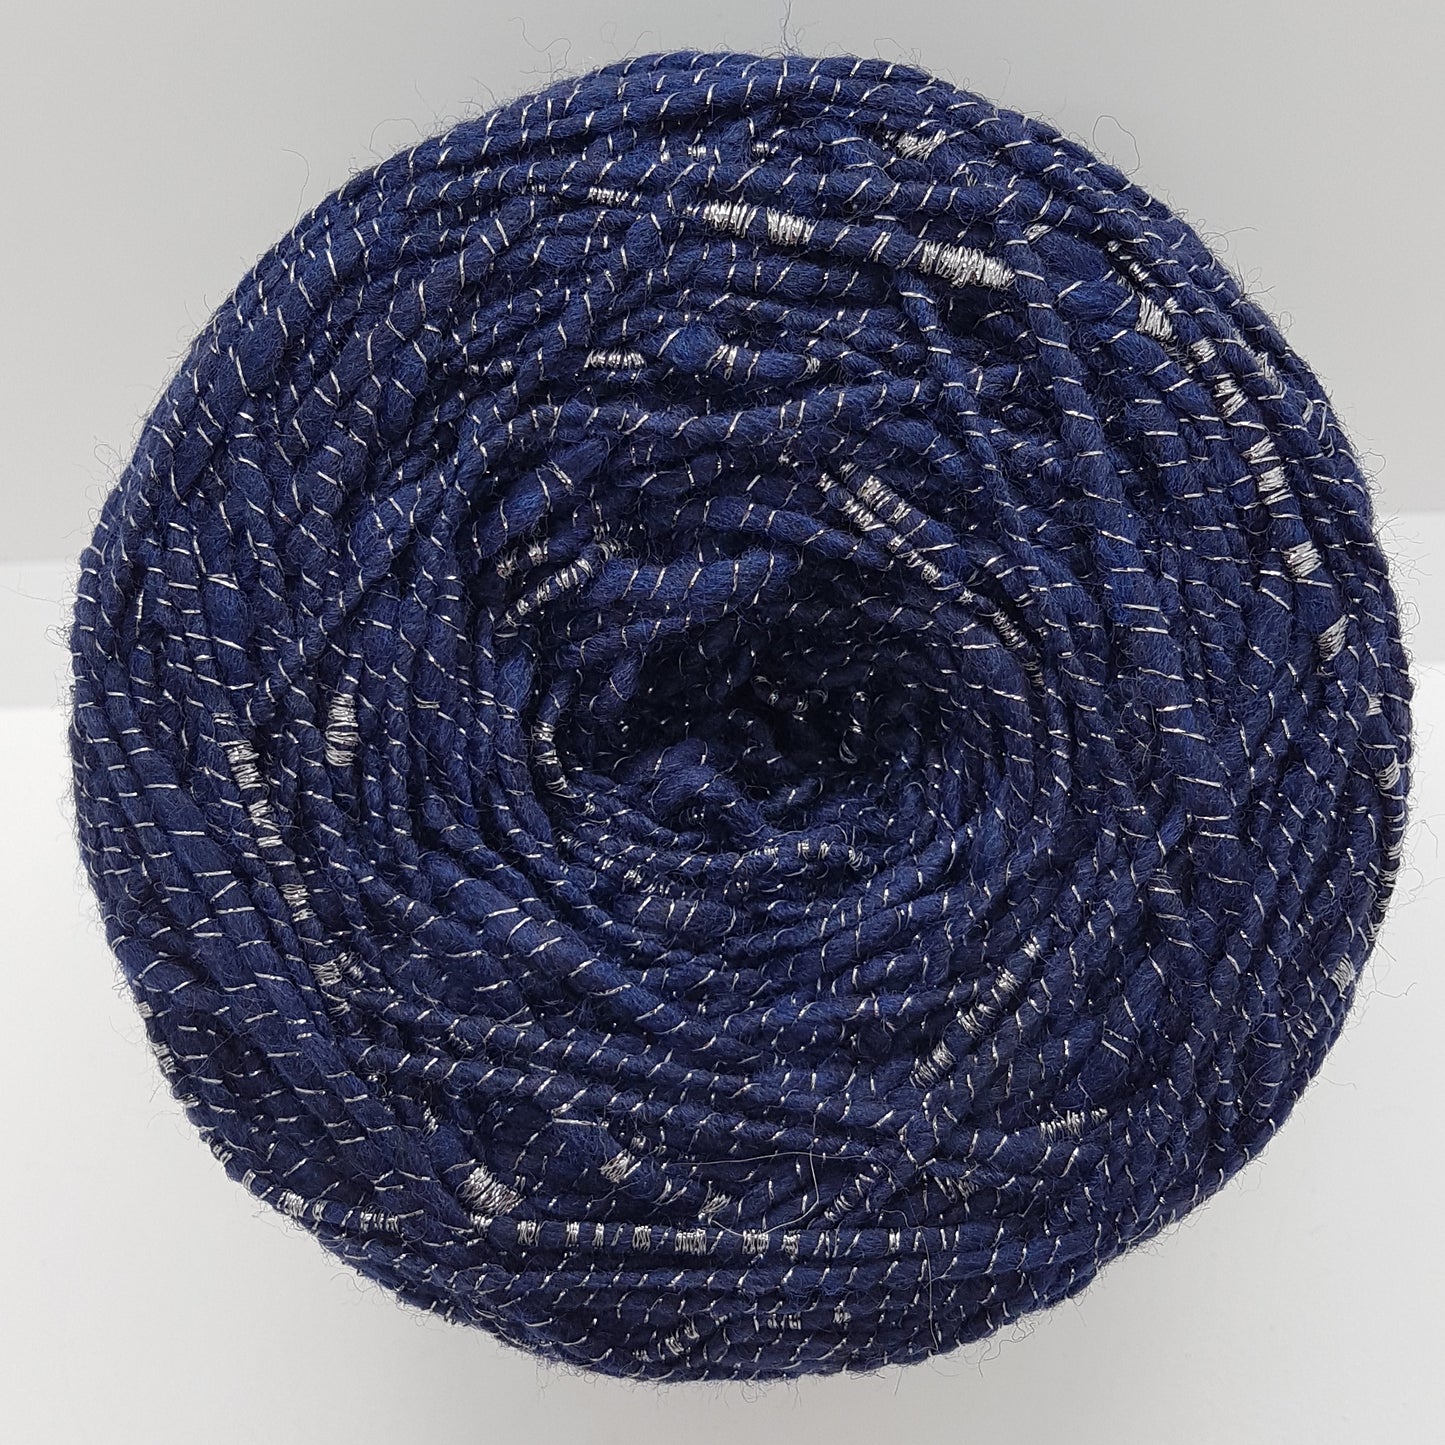 100g Lurex mixed wool Italian yarn blue color N.323